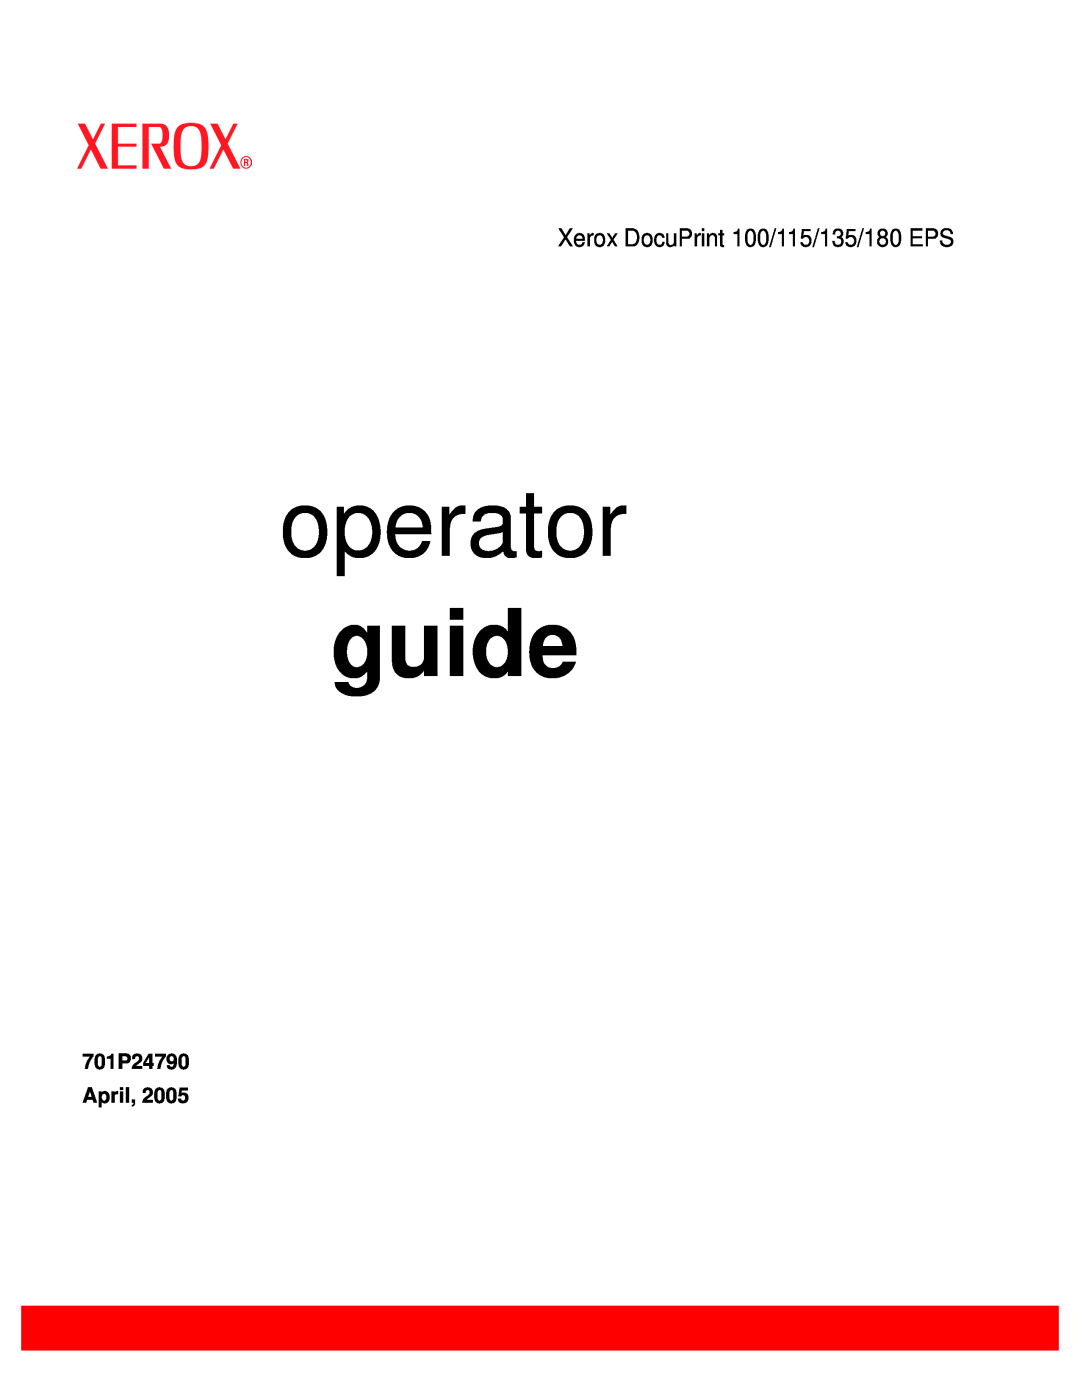 Xerox manual operator, guide, Xerox DocuPrint 100/115/135/180 EPS, 701P24790 April 